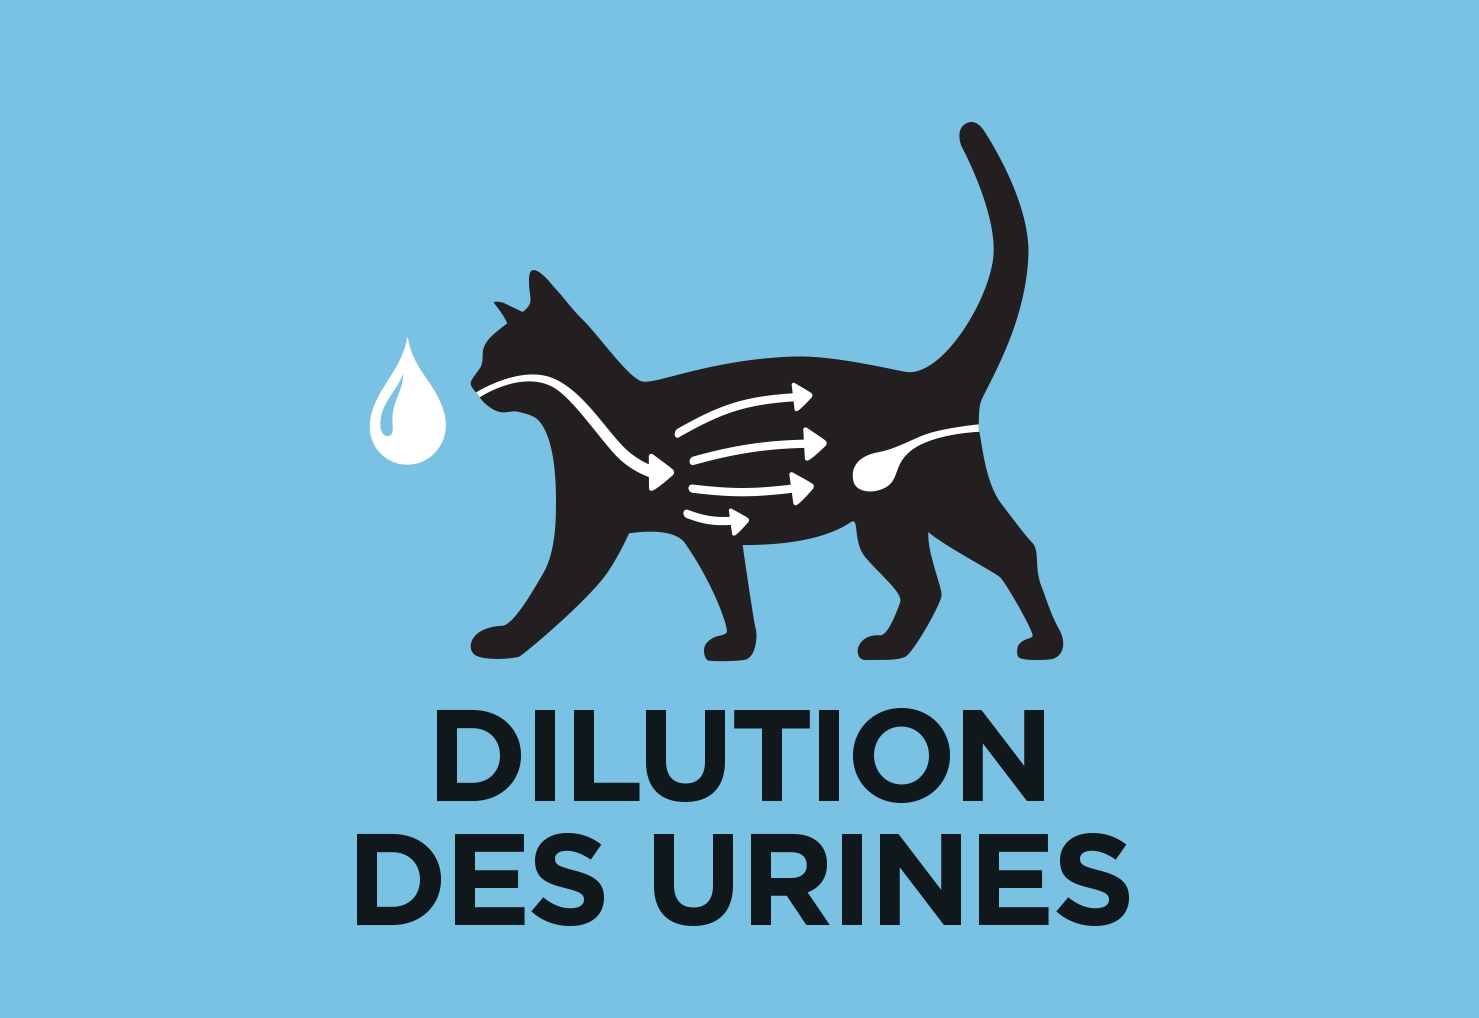 urine dillution image